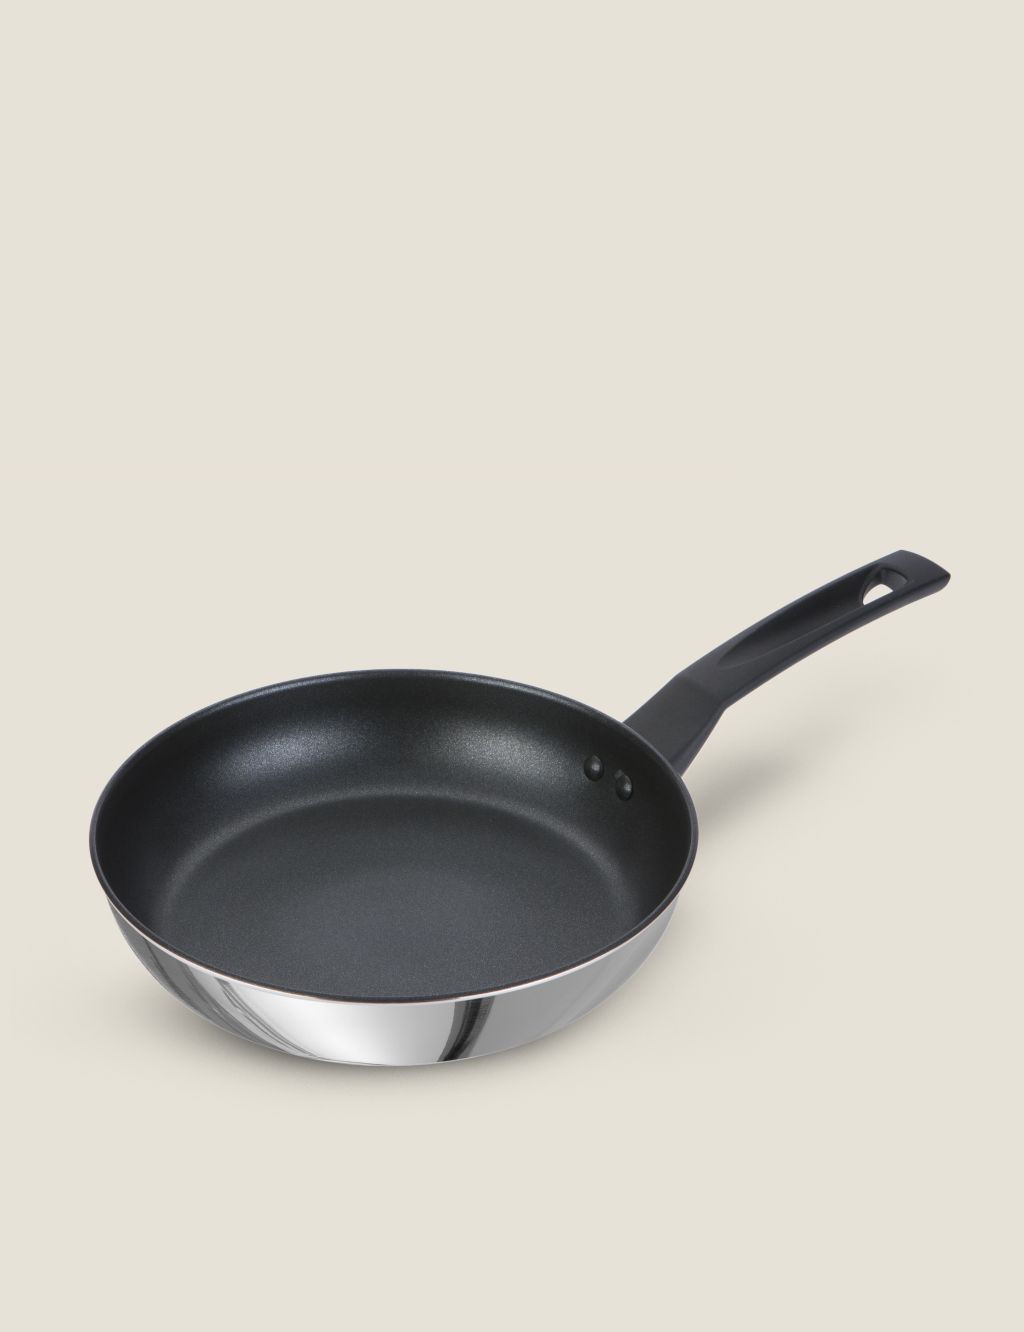 Stainless Steel 25cm Medium Frying Pan image 1